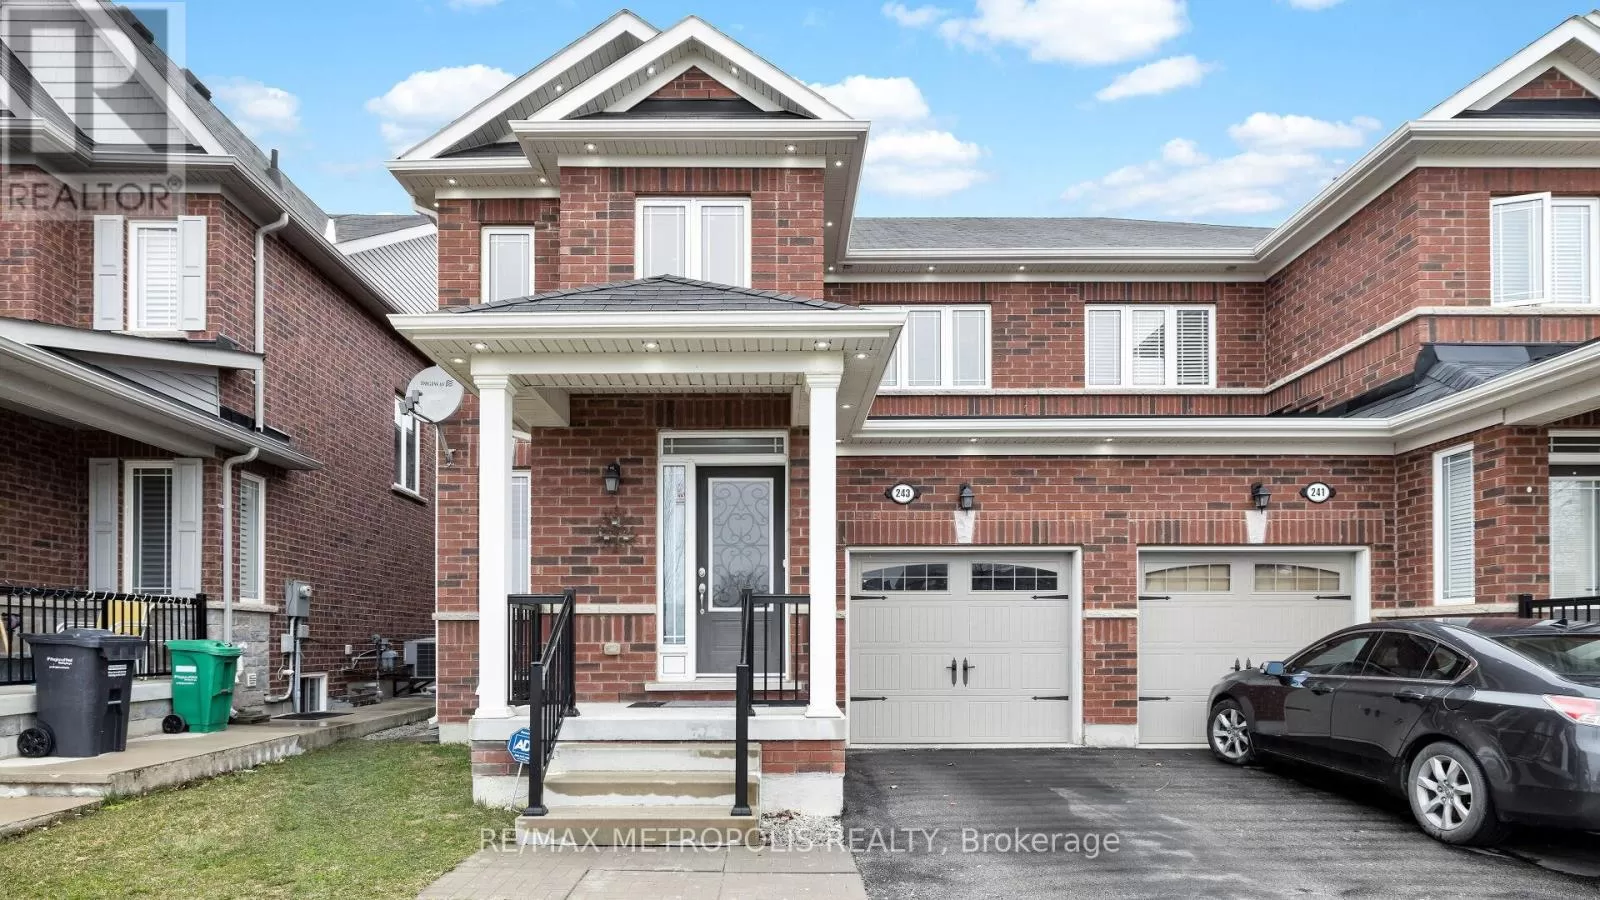 House for rent: 243 Robert Parkinson Dr, Brampton, Ontario L7A 3Y1